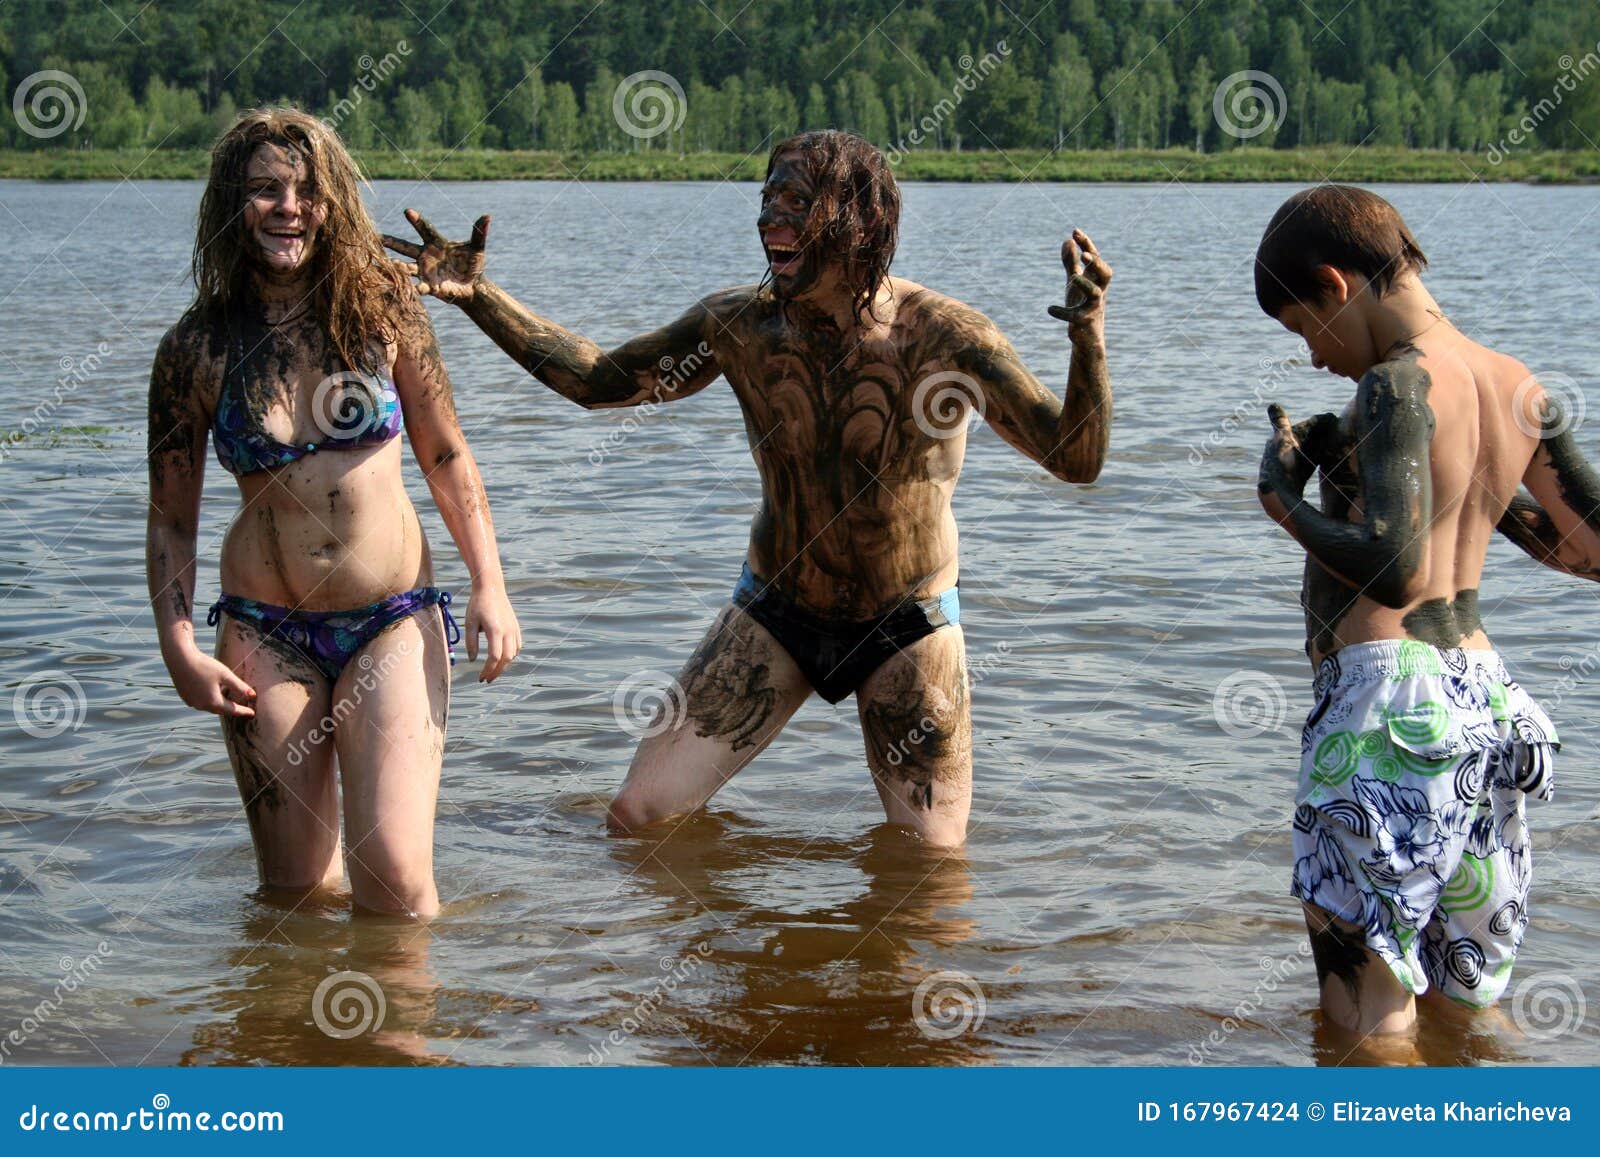 Russian family nudists pics